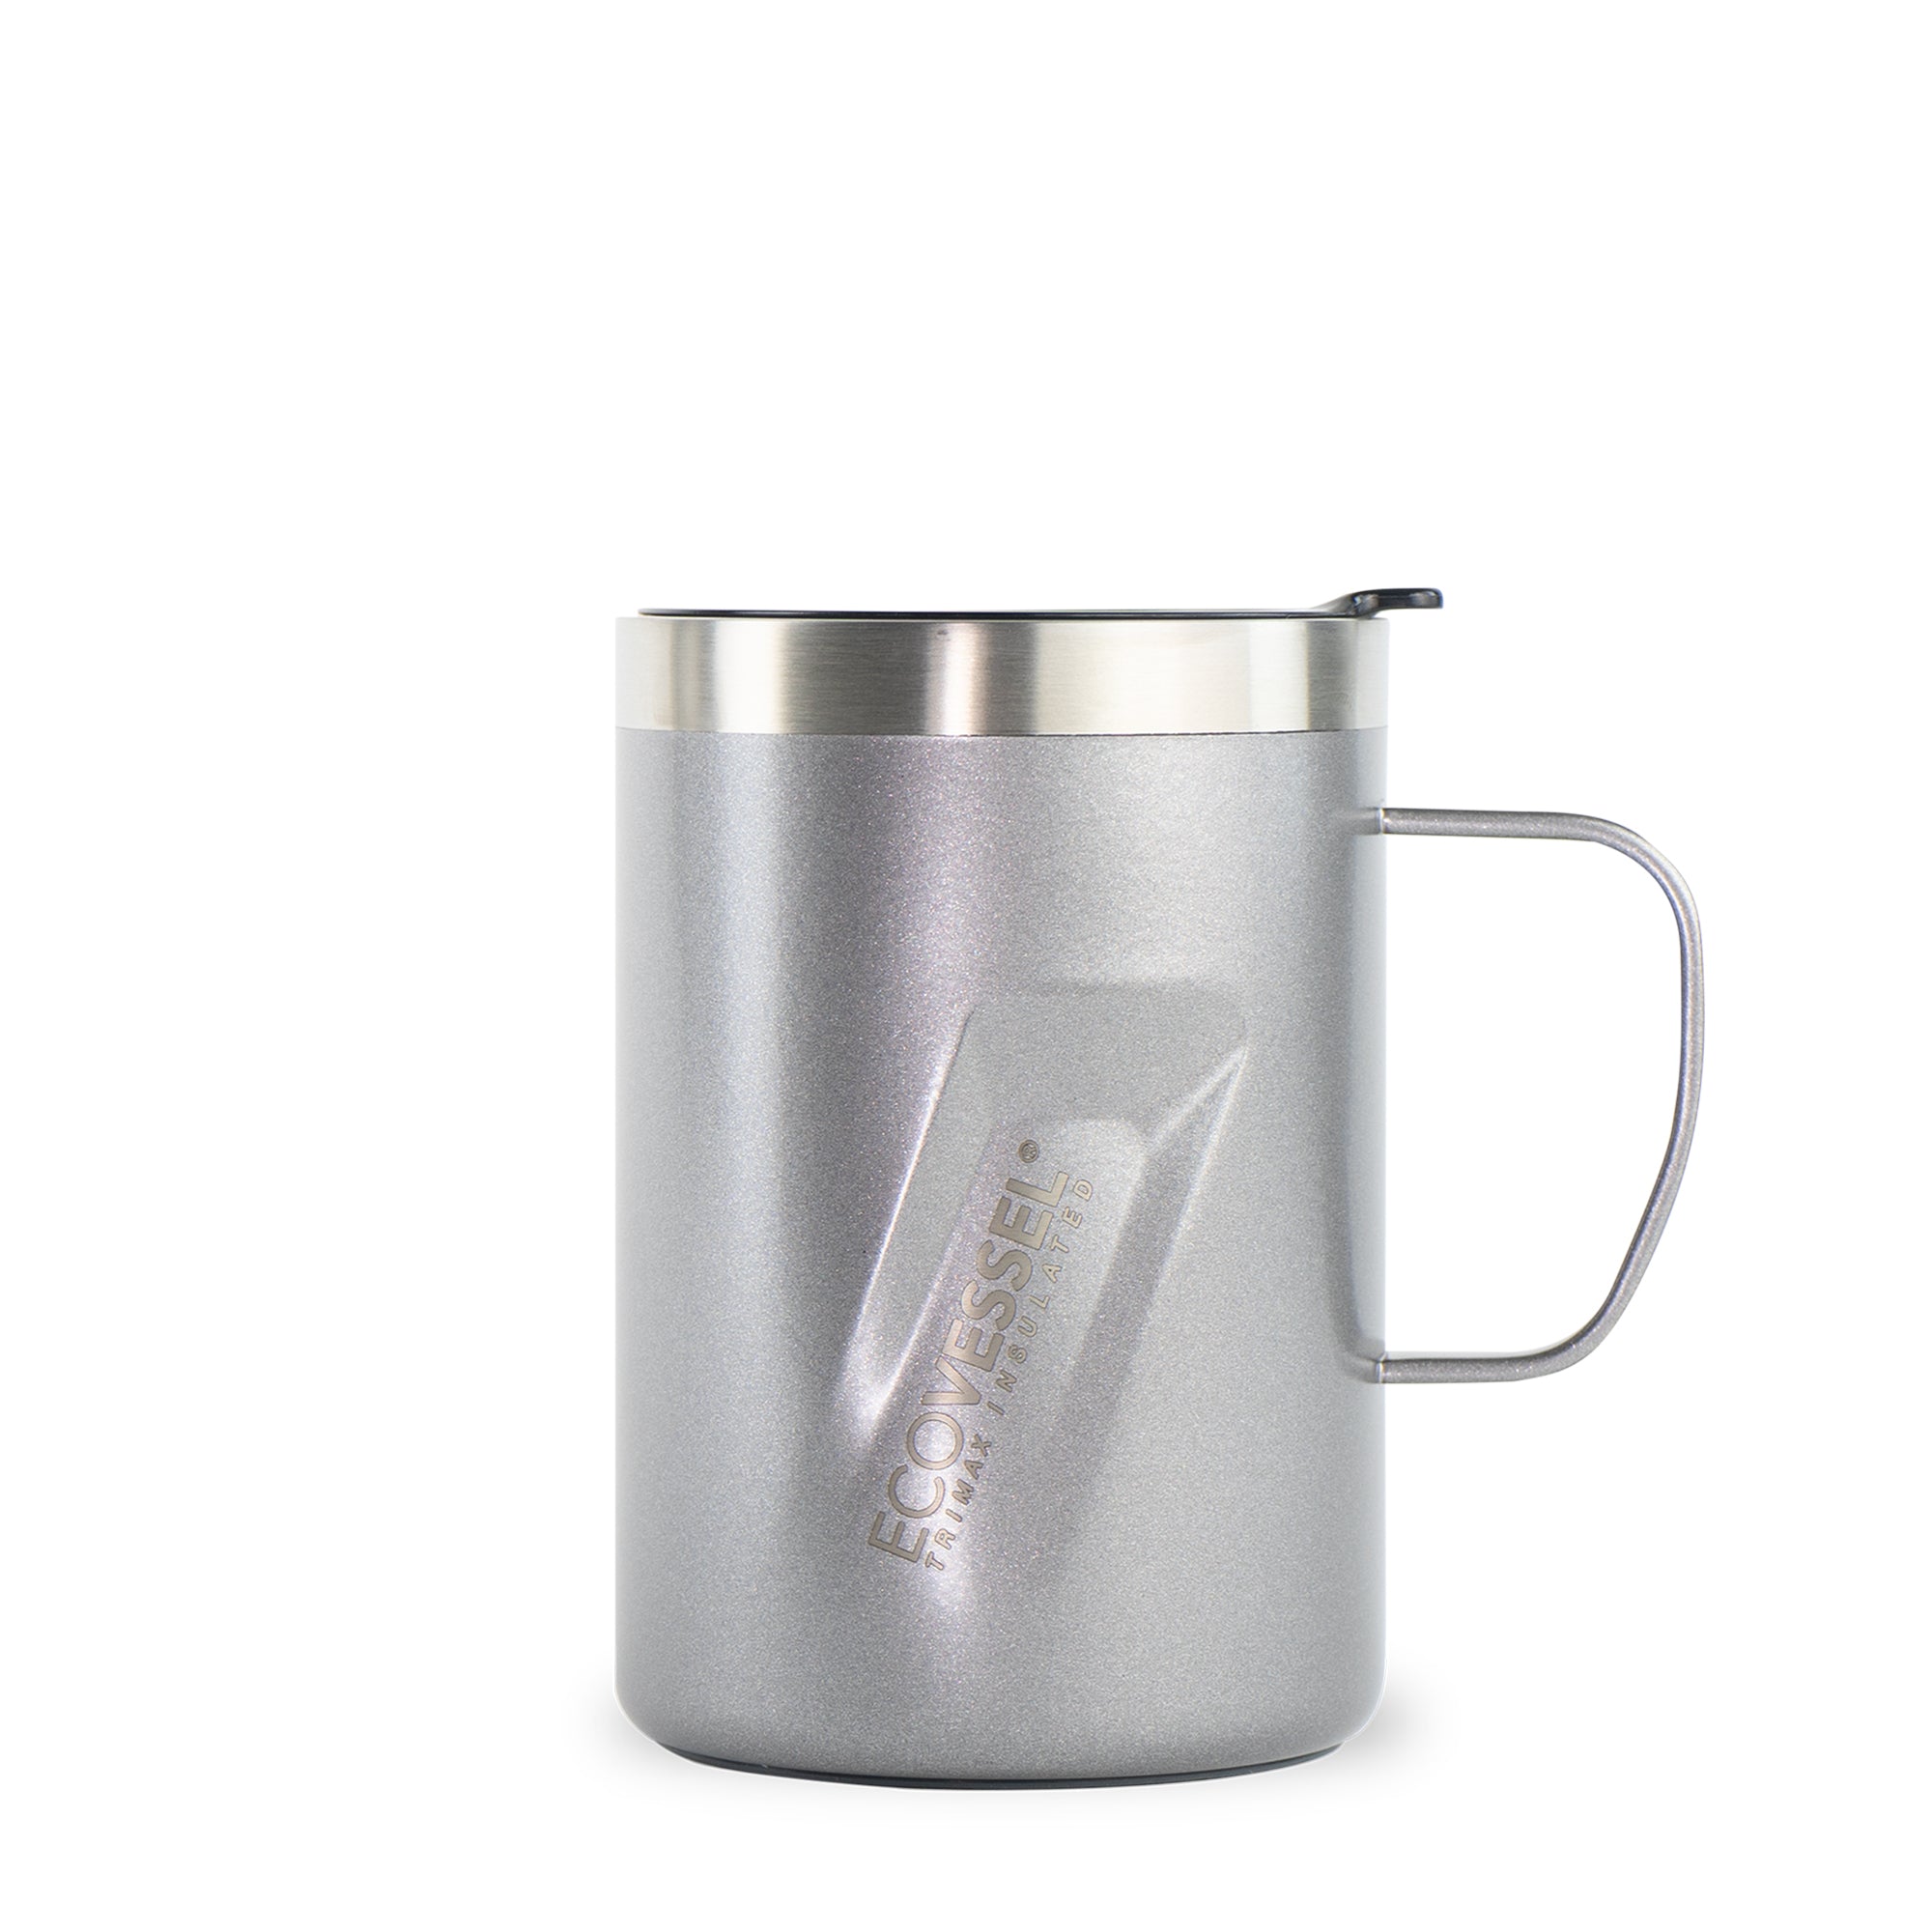 Stainless Steel Insulated Coffee Mug / Beer Camping Mug - 16 oz